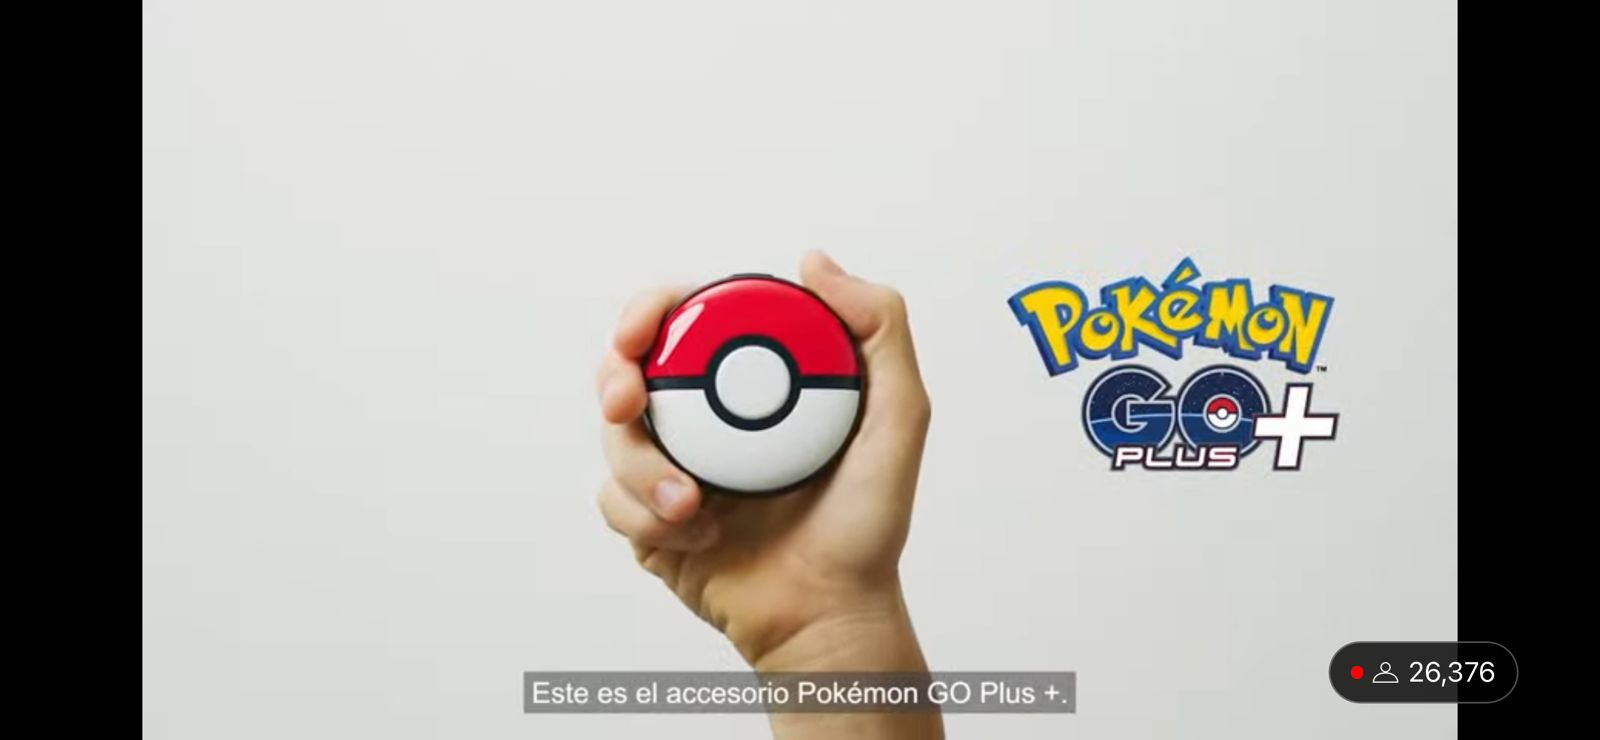 Pokémon Go Plus +